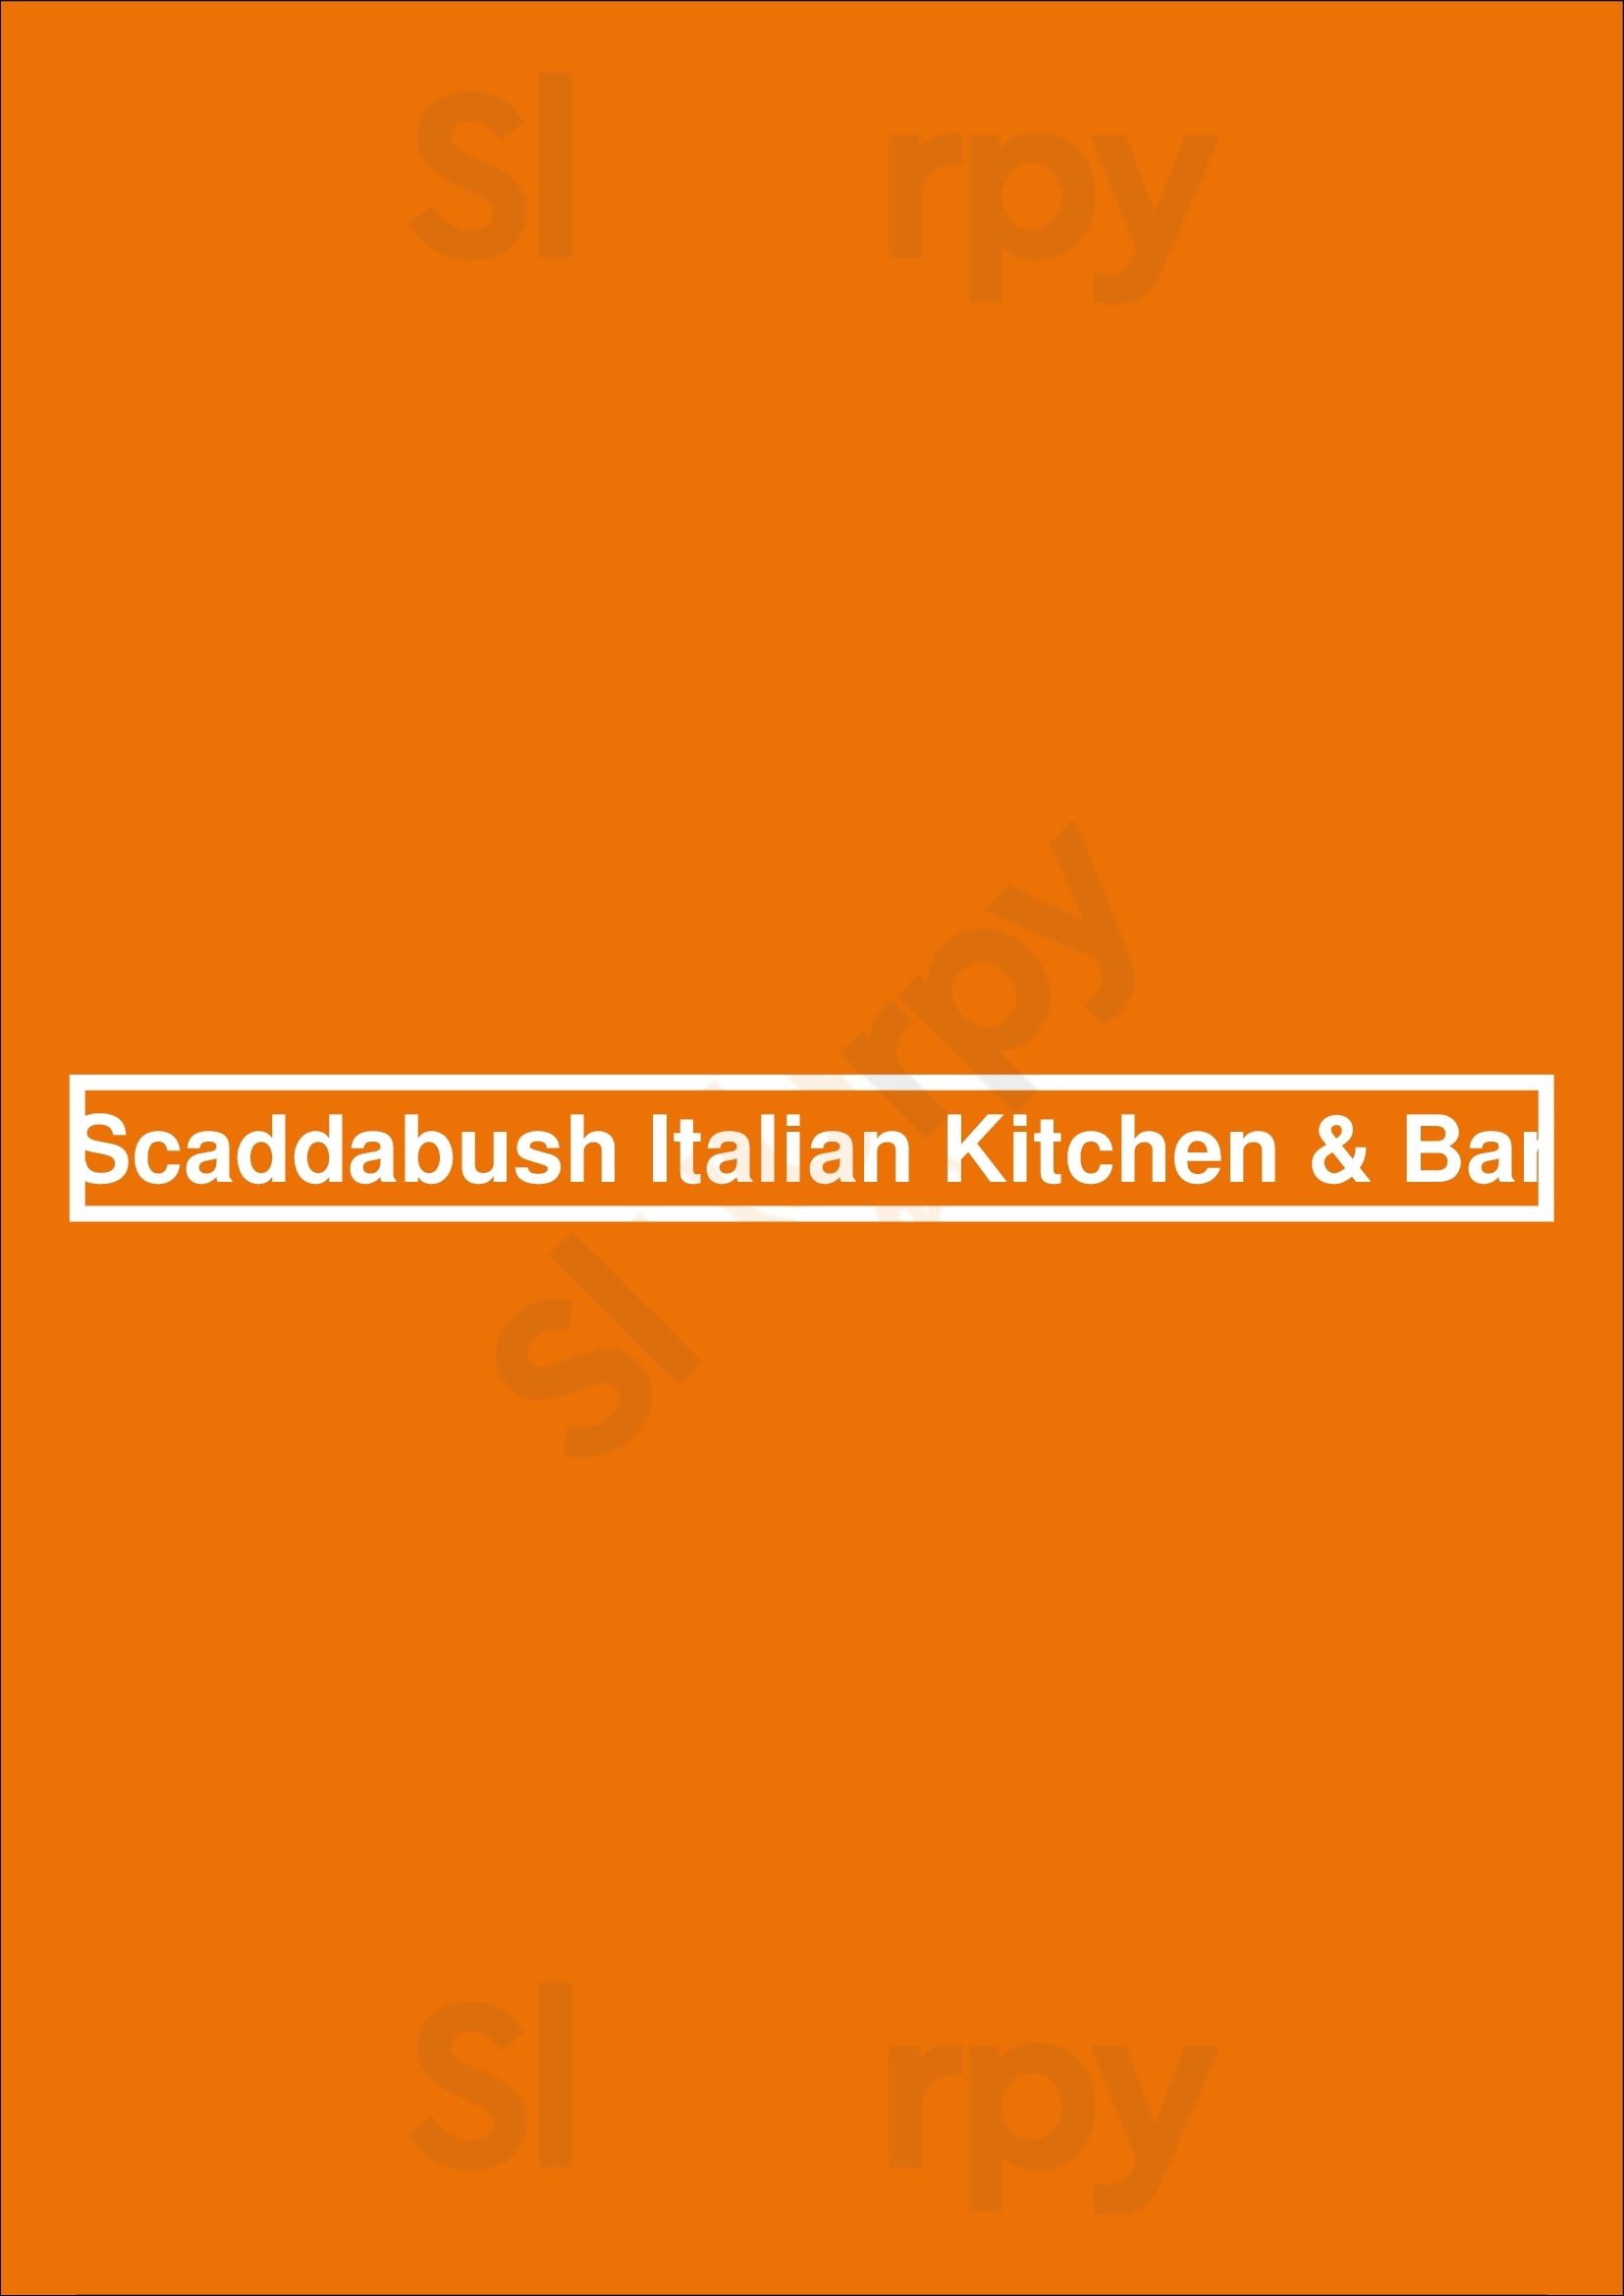 Scaddabush Italian Kitchen & Bar Toronto Menu - 1